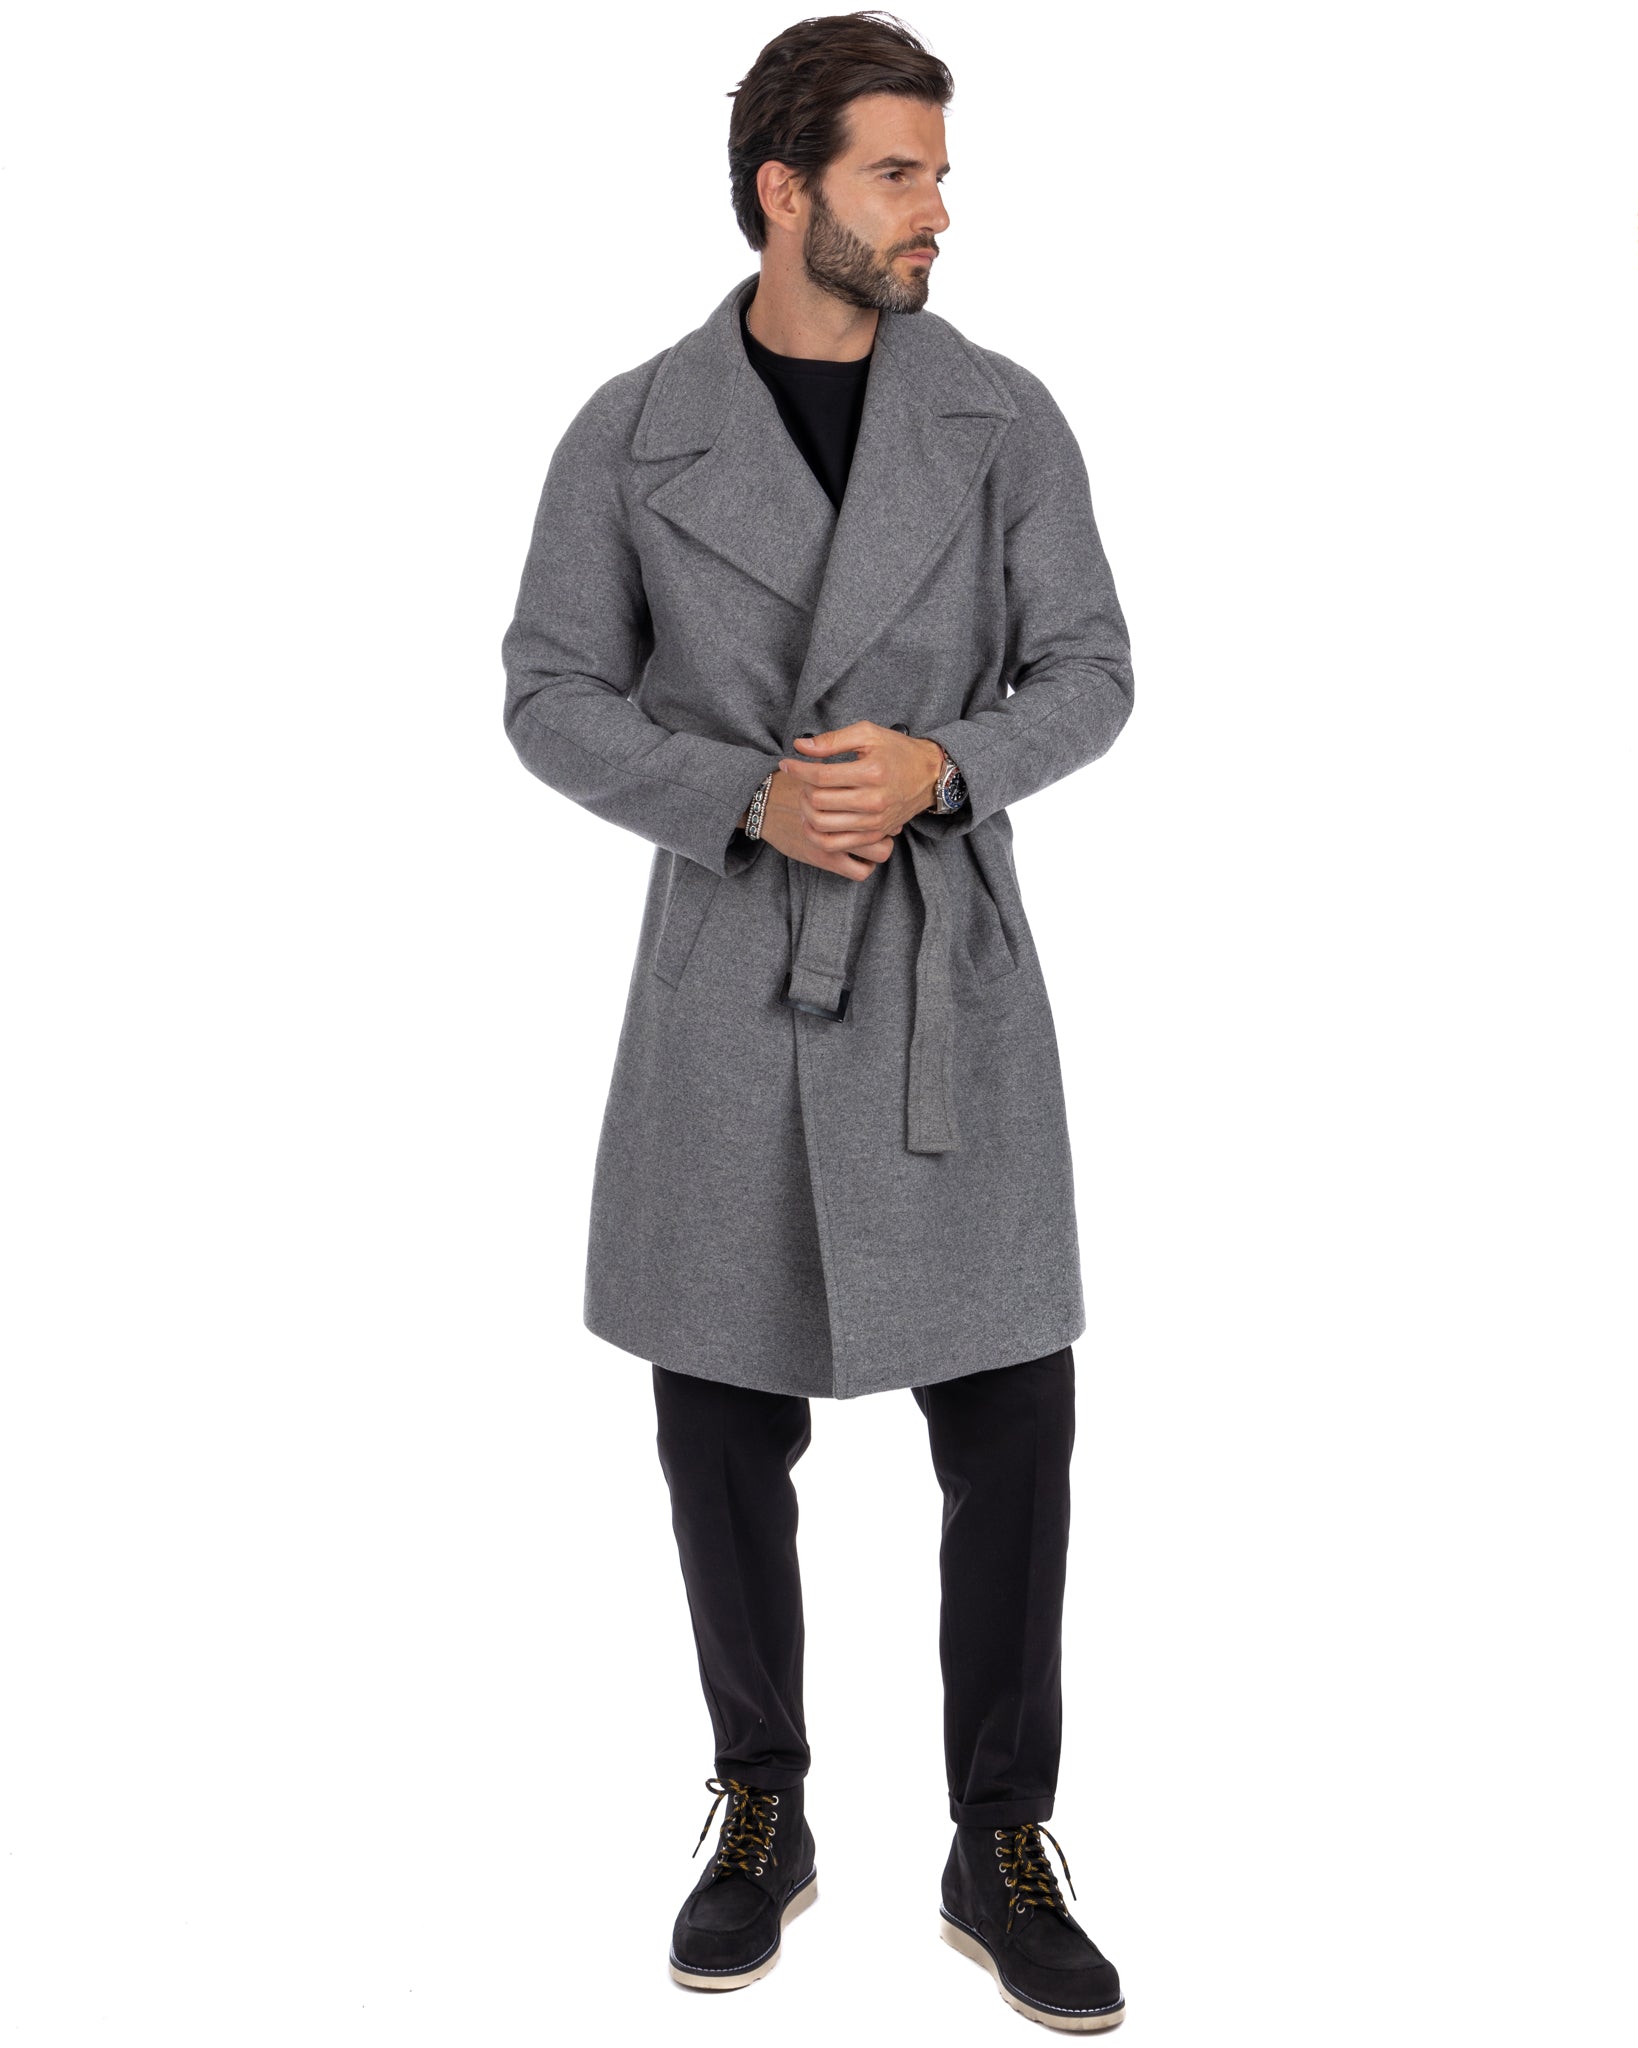 Claude - light gray dressing gown coat